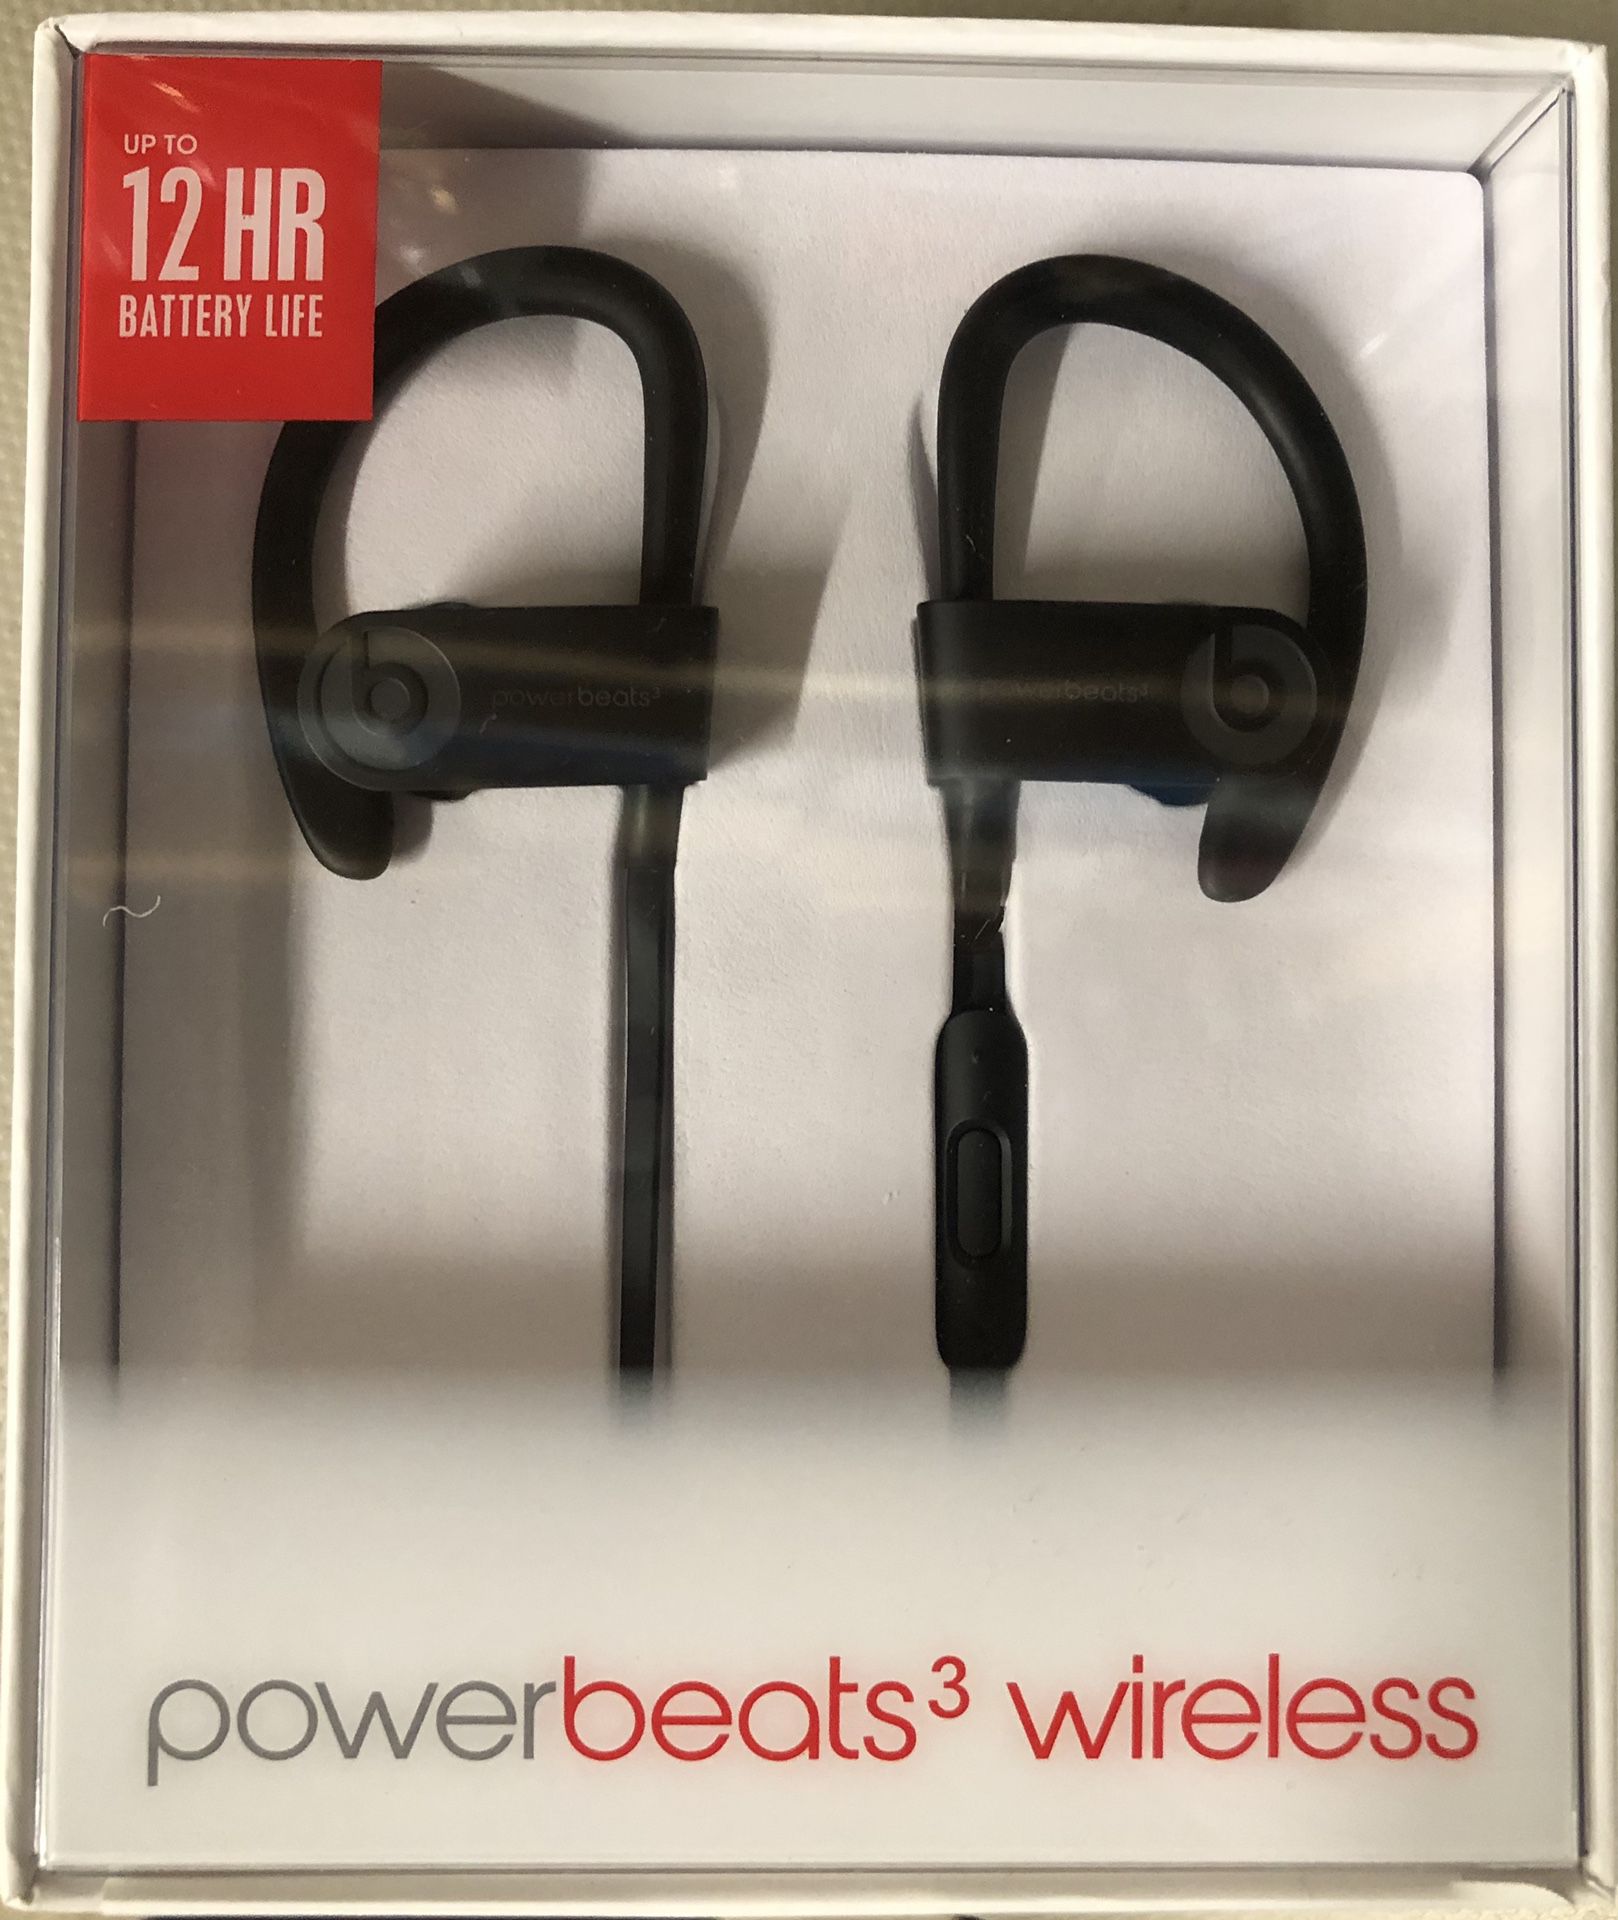 Powerbeats 3 wireless brand new sealed box (black)